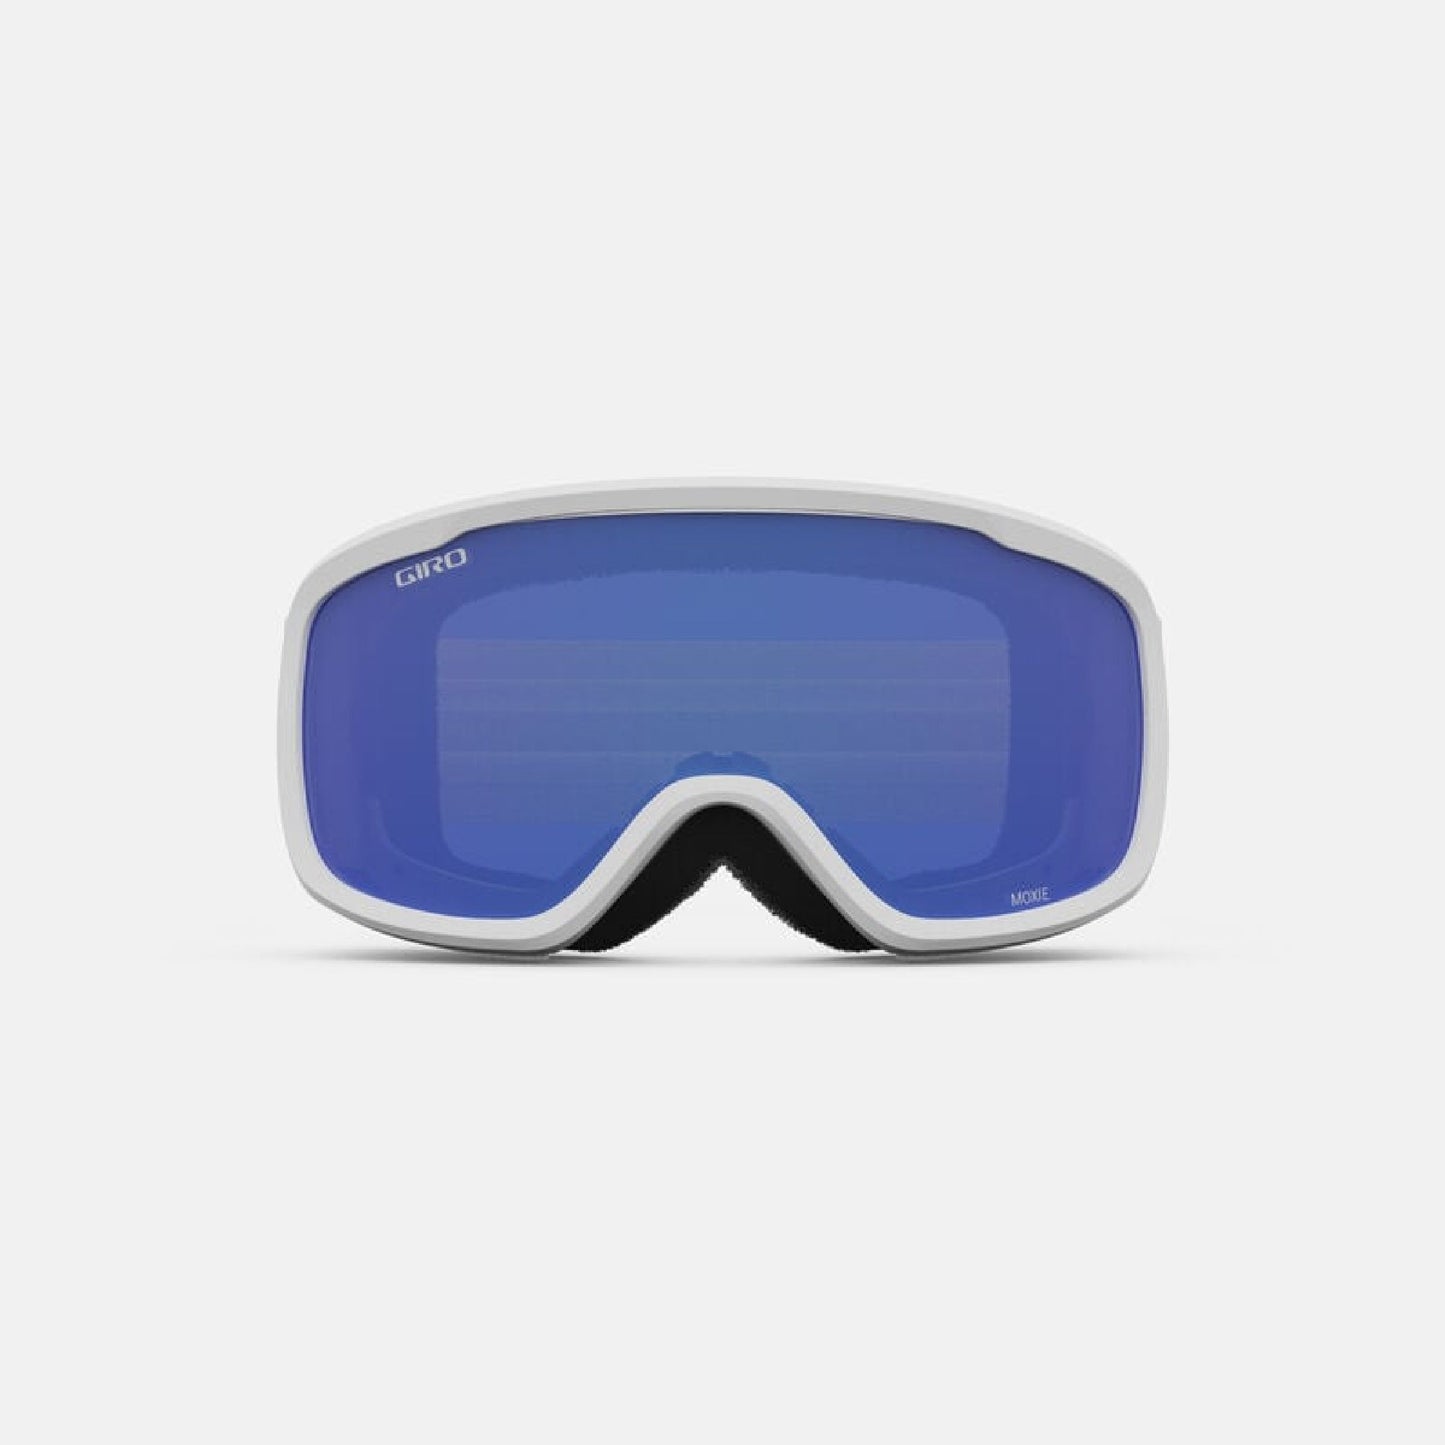 Giro Women's Moxie AF Snow Goggles White Core LIght Gray Cobalt Snow Goggles